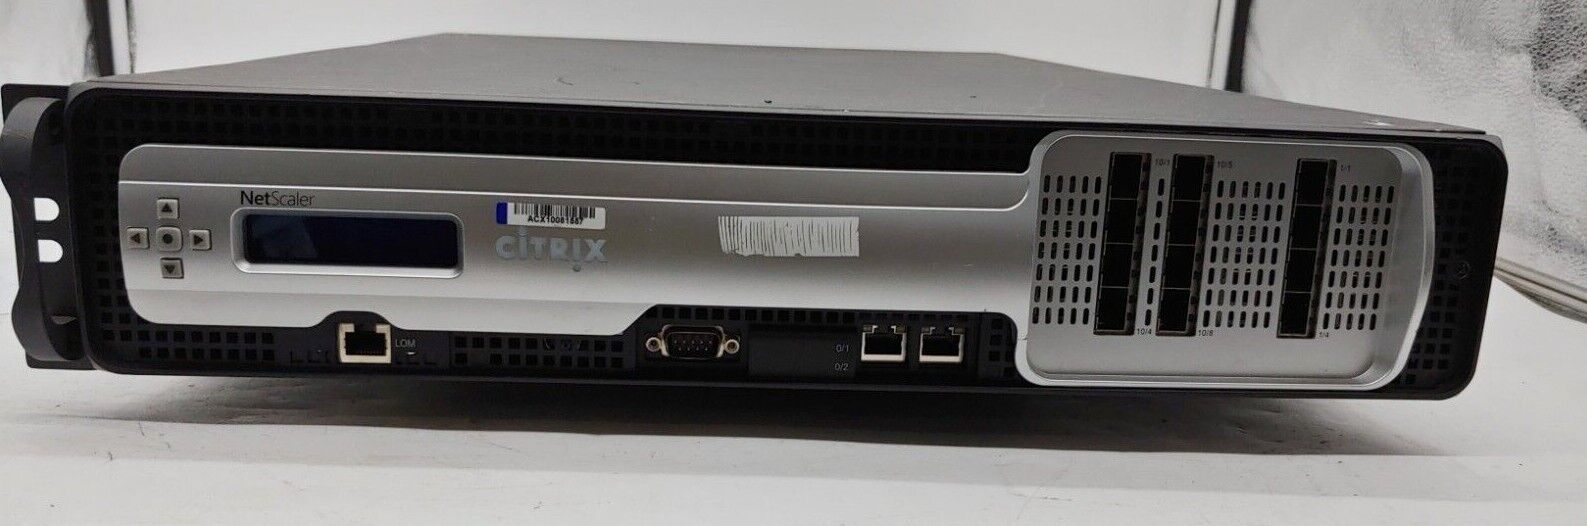 Citrix Netscaler C11500 4x10ge Load Balancer